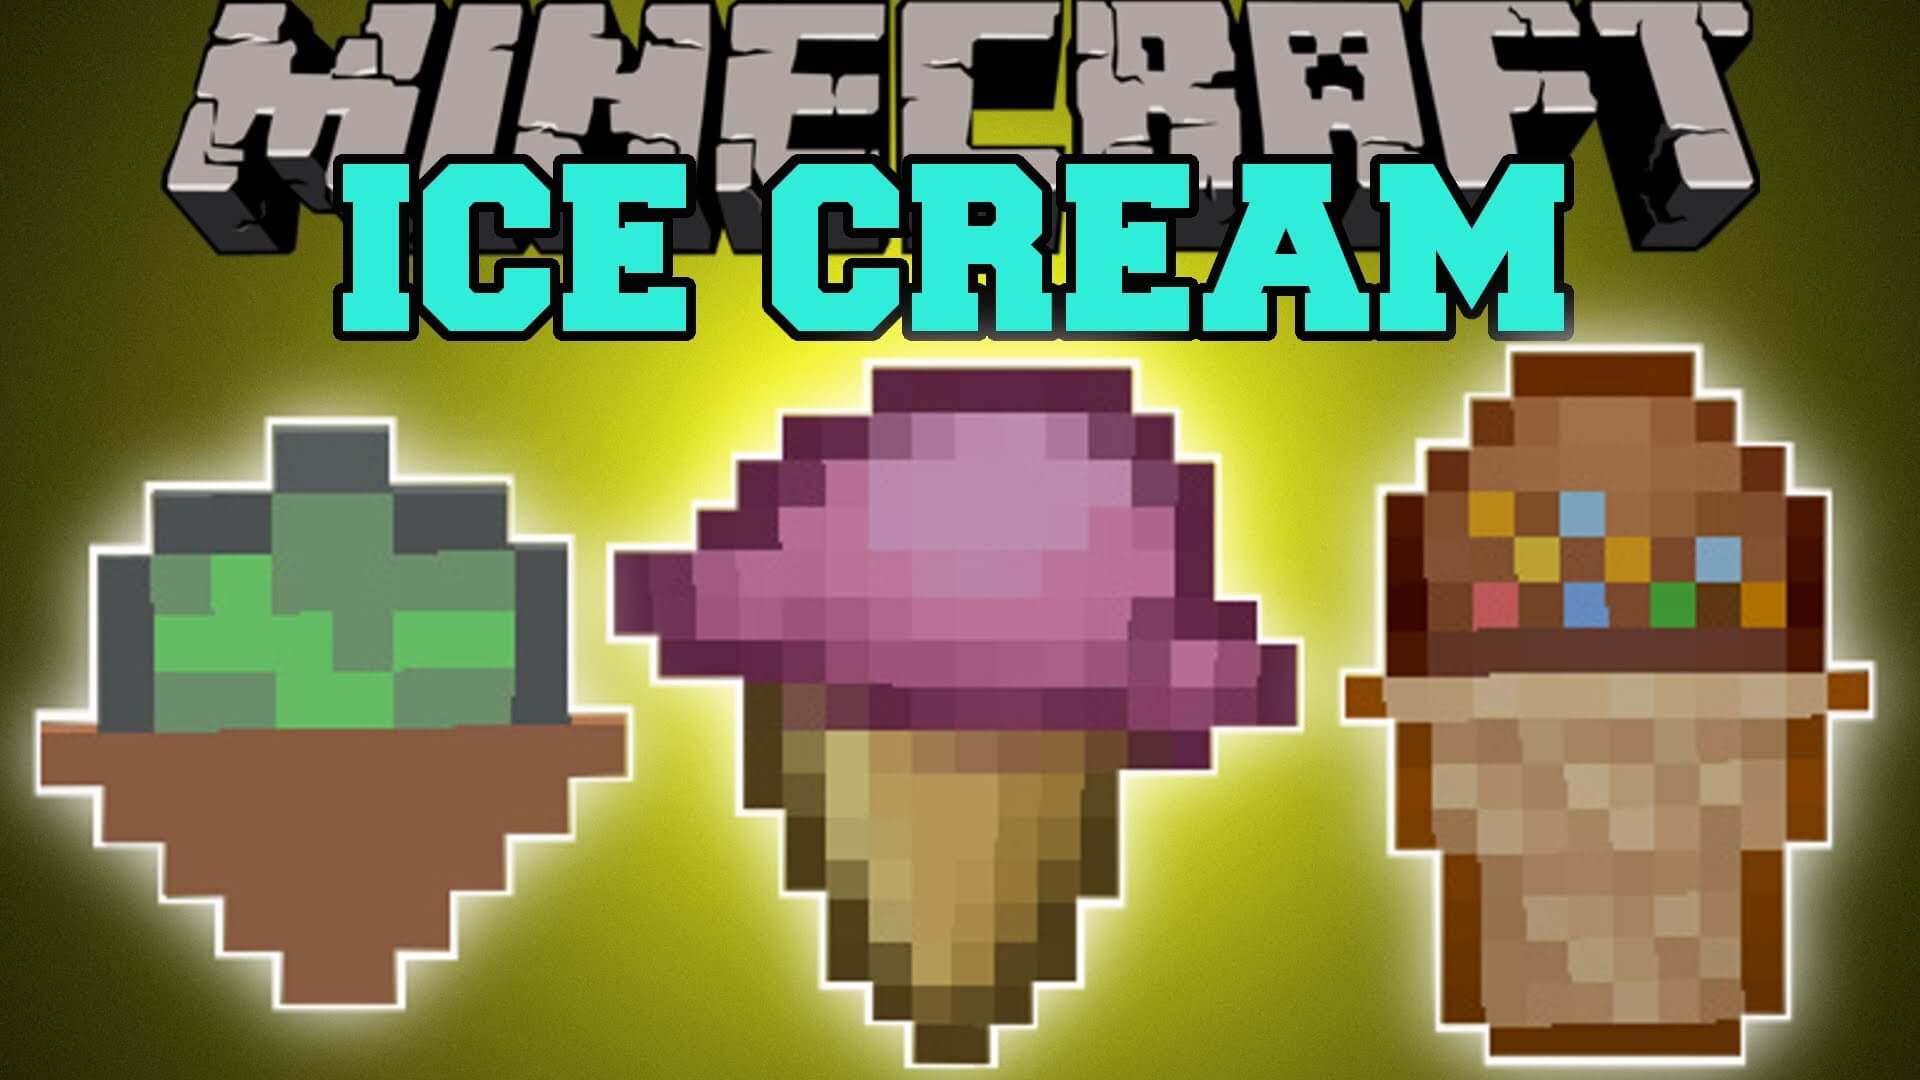 The Ice Cream скриншот 1